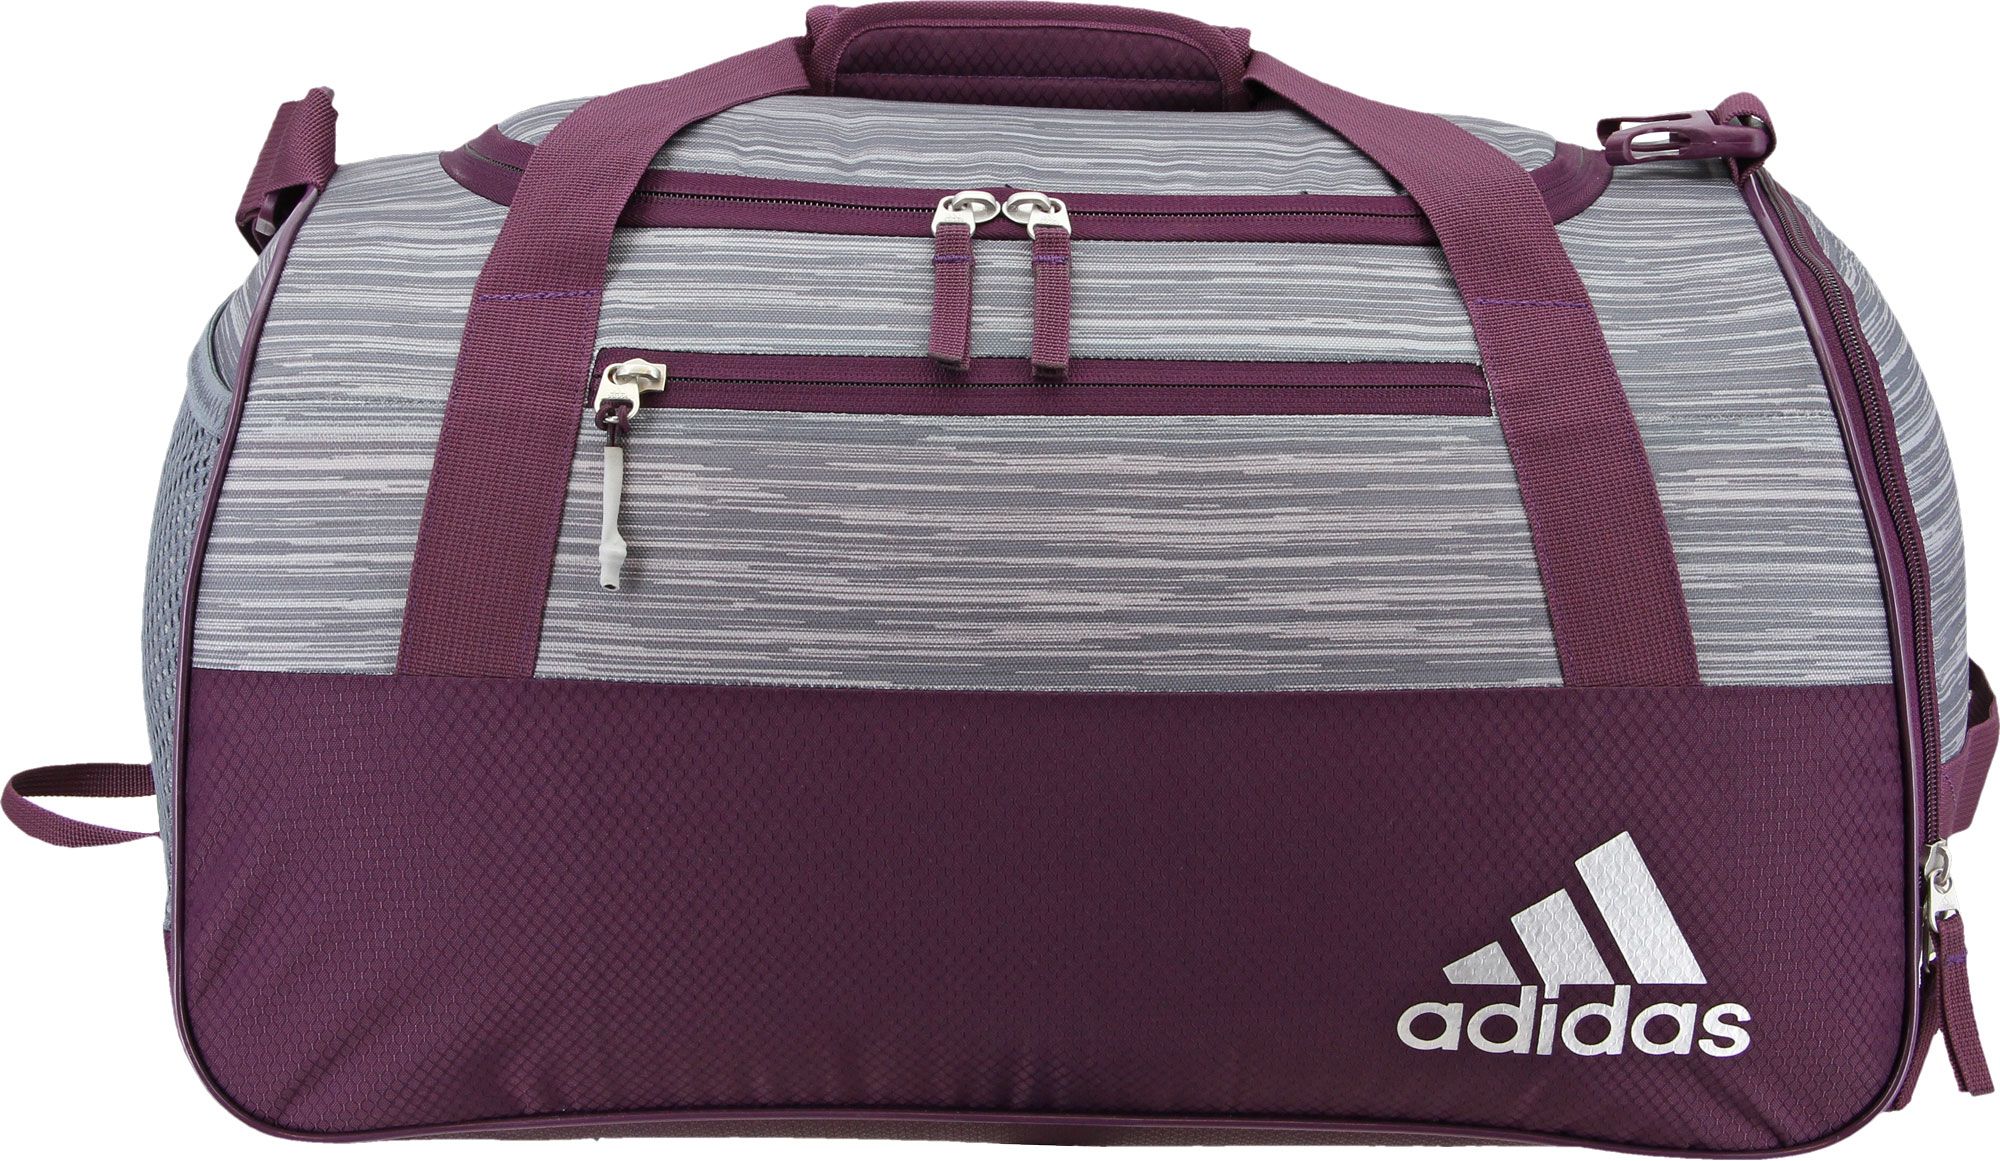 adidas Backpacks & Bags | DICK'S Sporting Goods